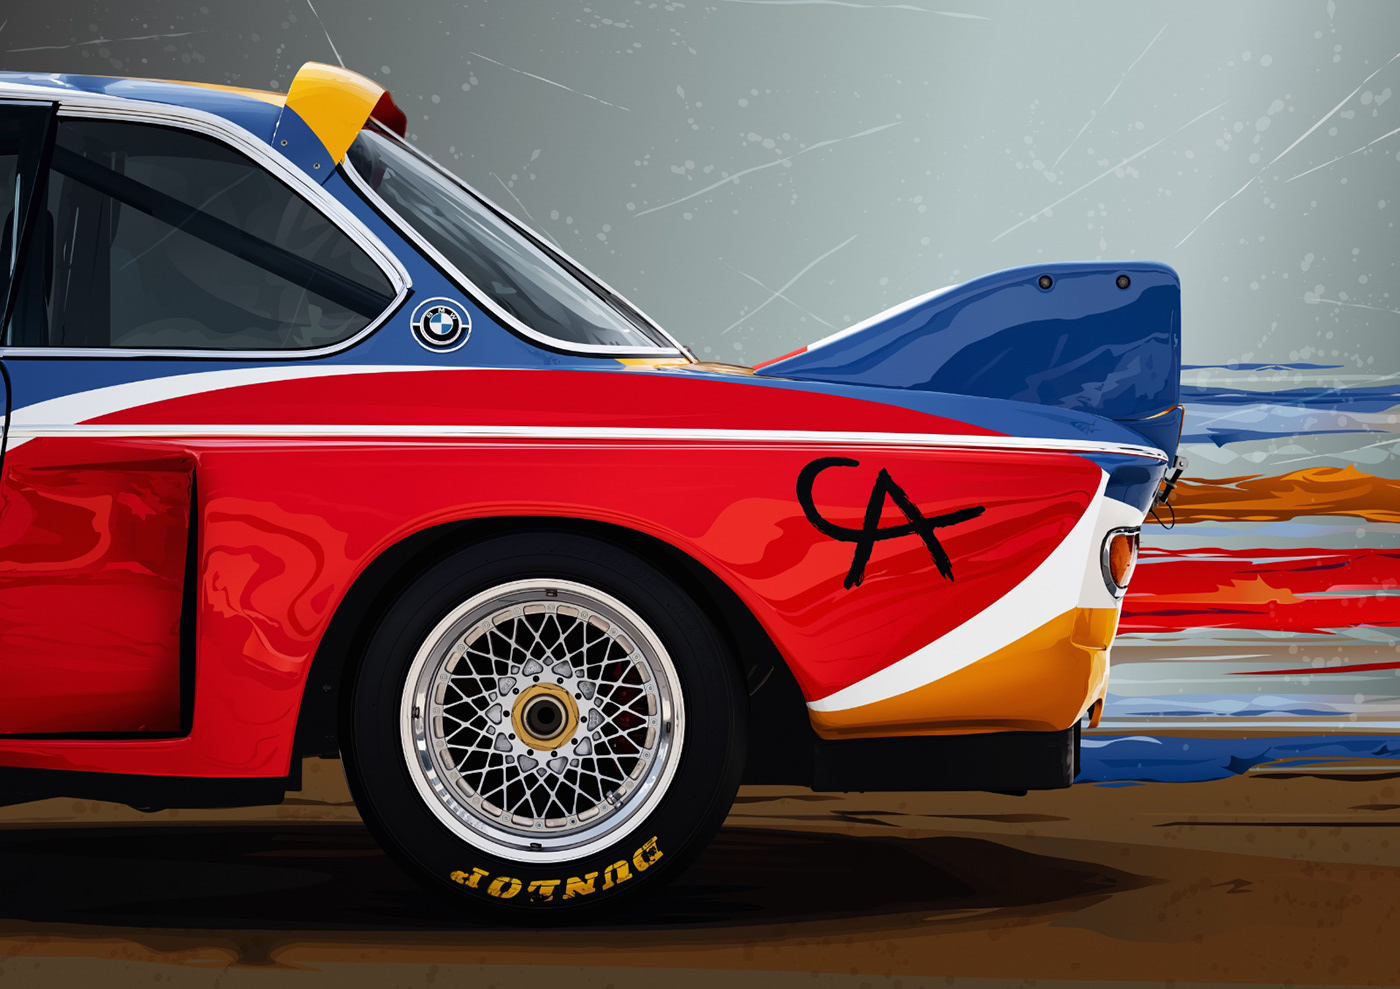 BMW 3.0 CSL art car vector illustration